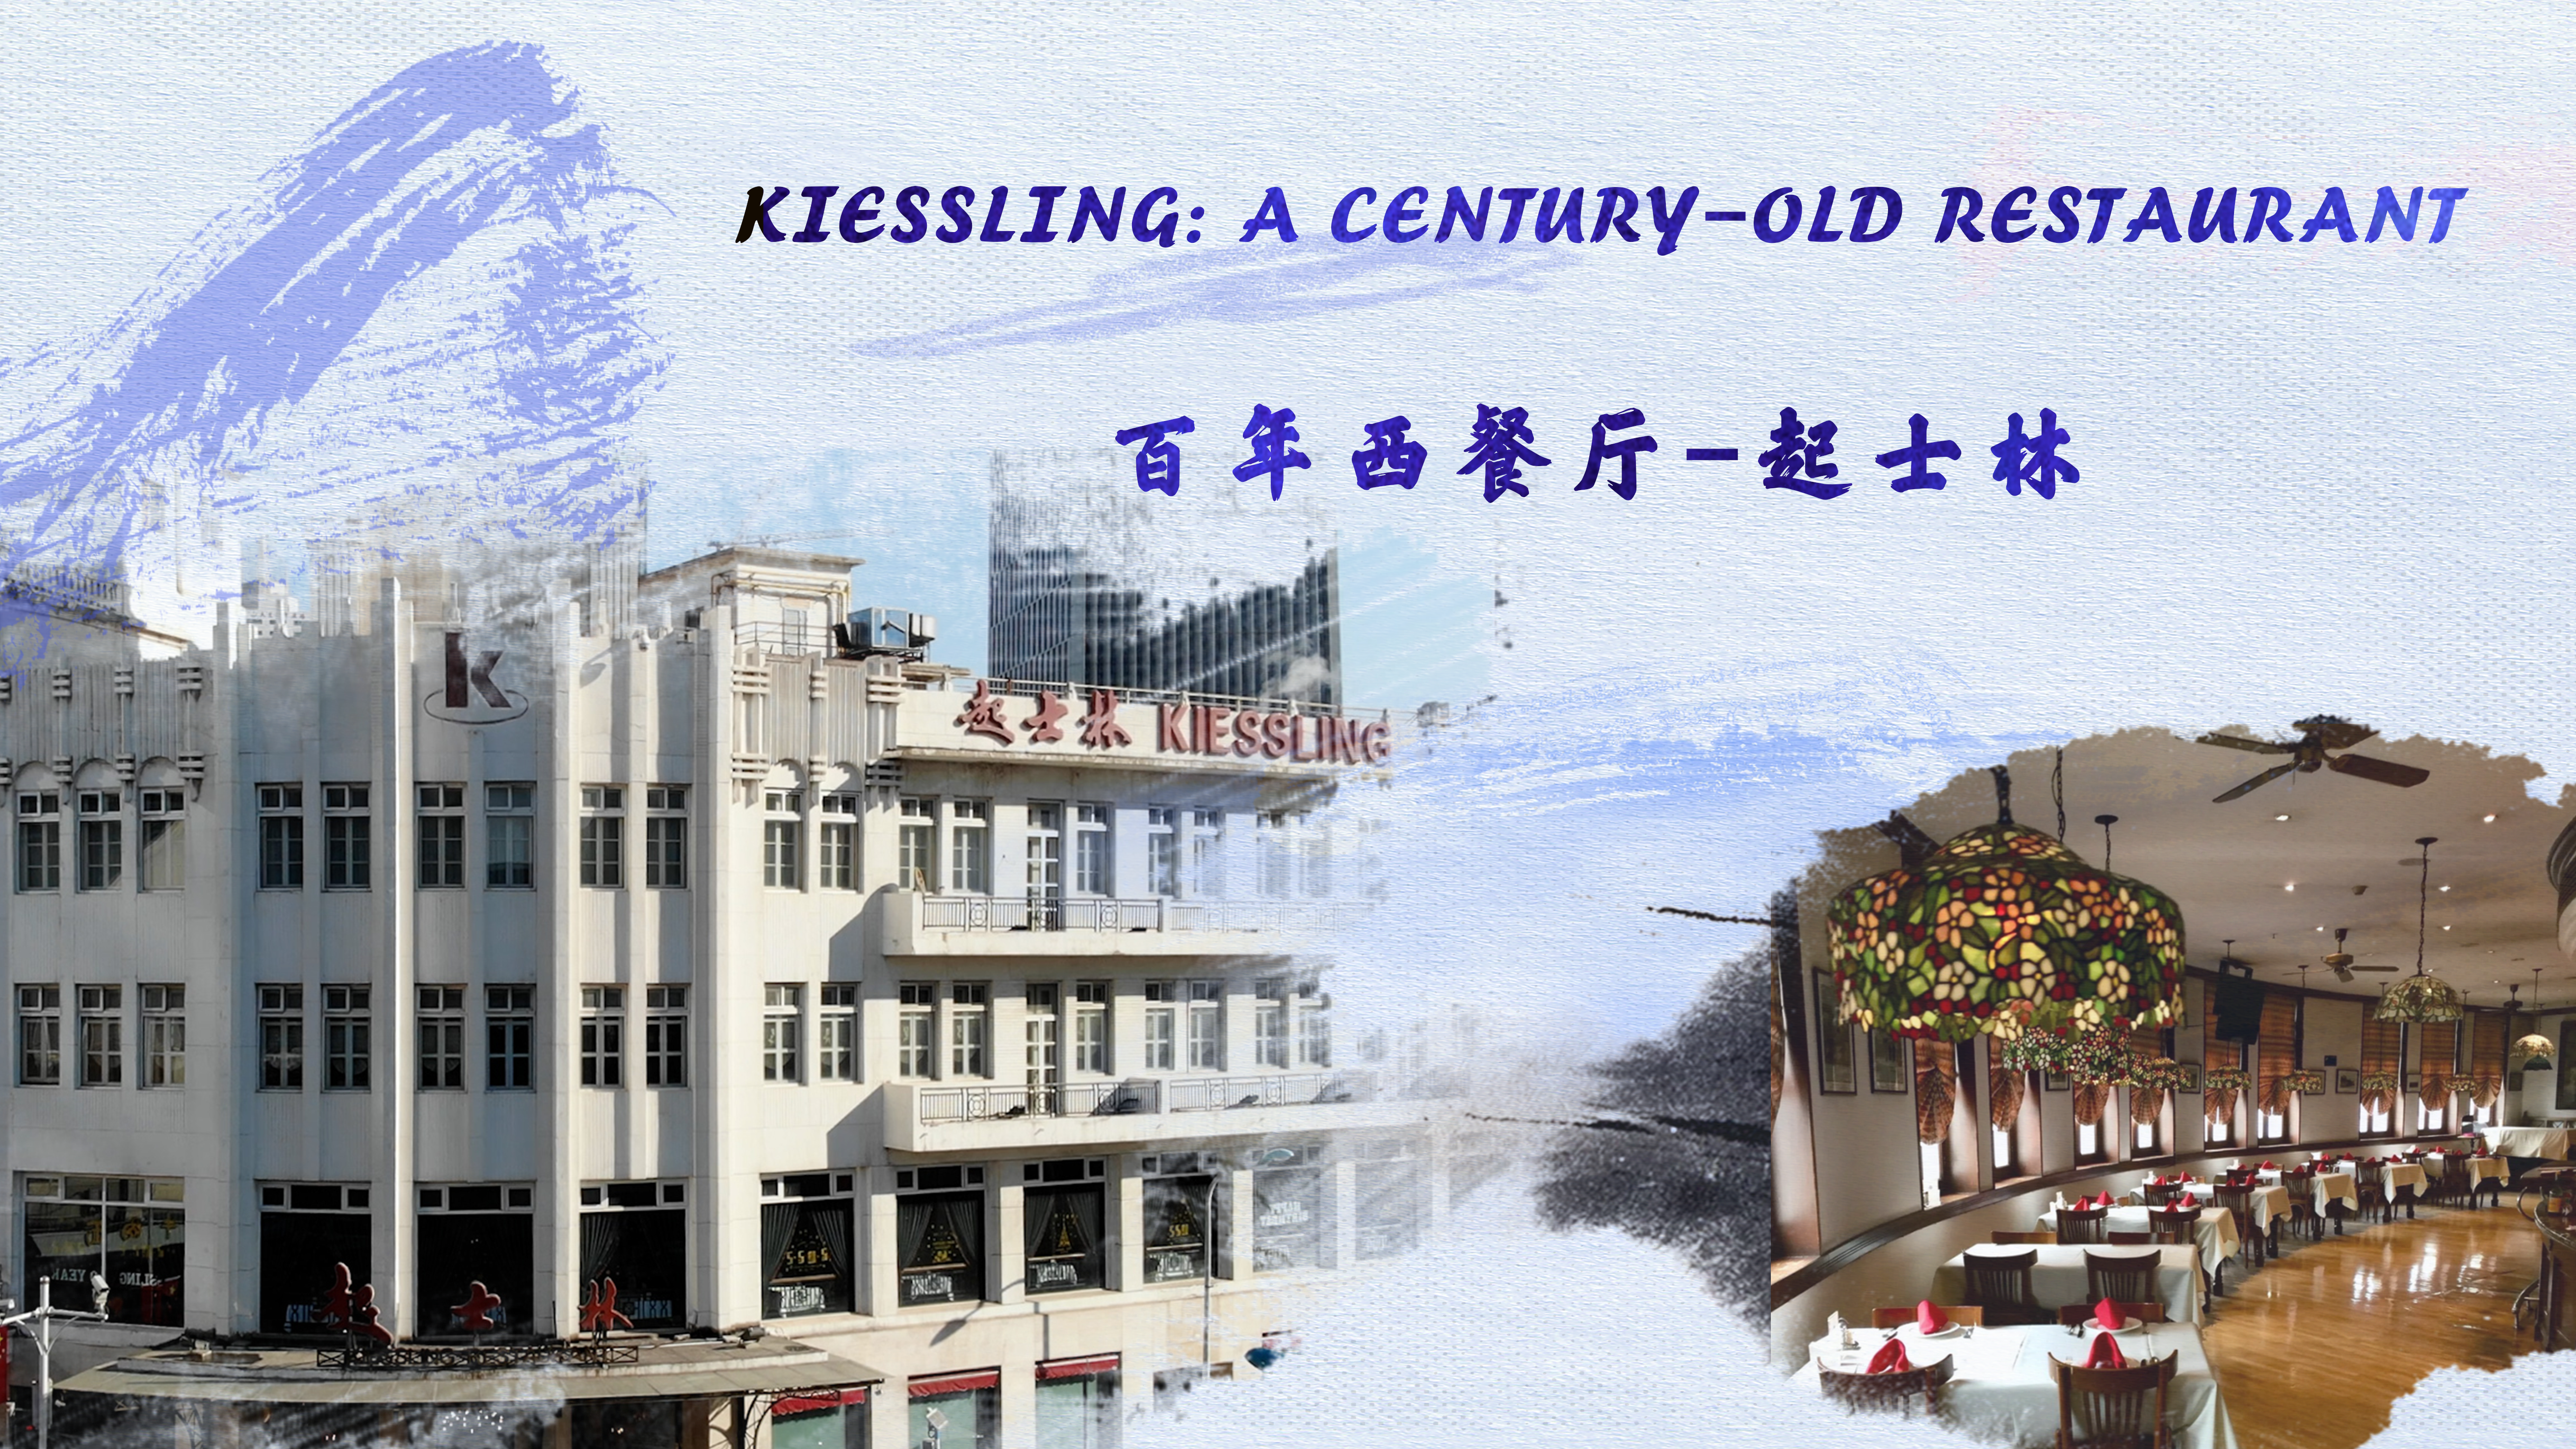 Kiessling Restaurant—a century-old western restaurant in Tianjin